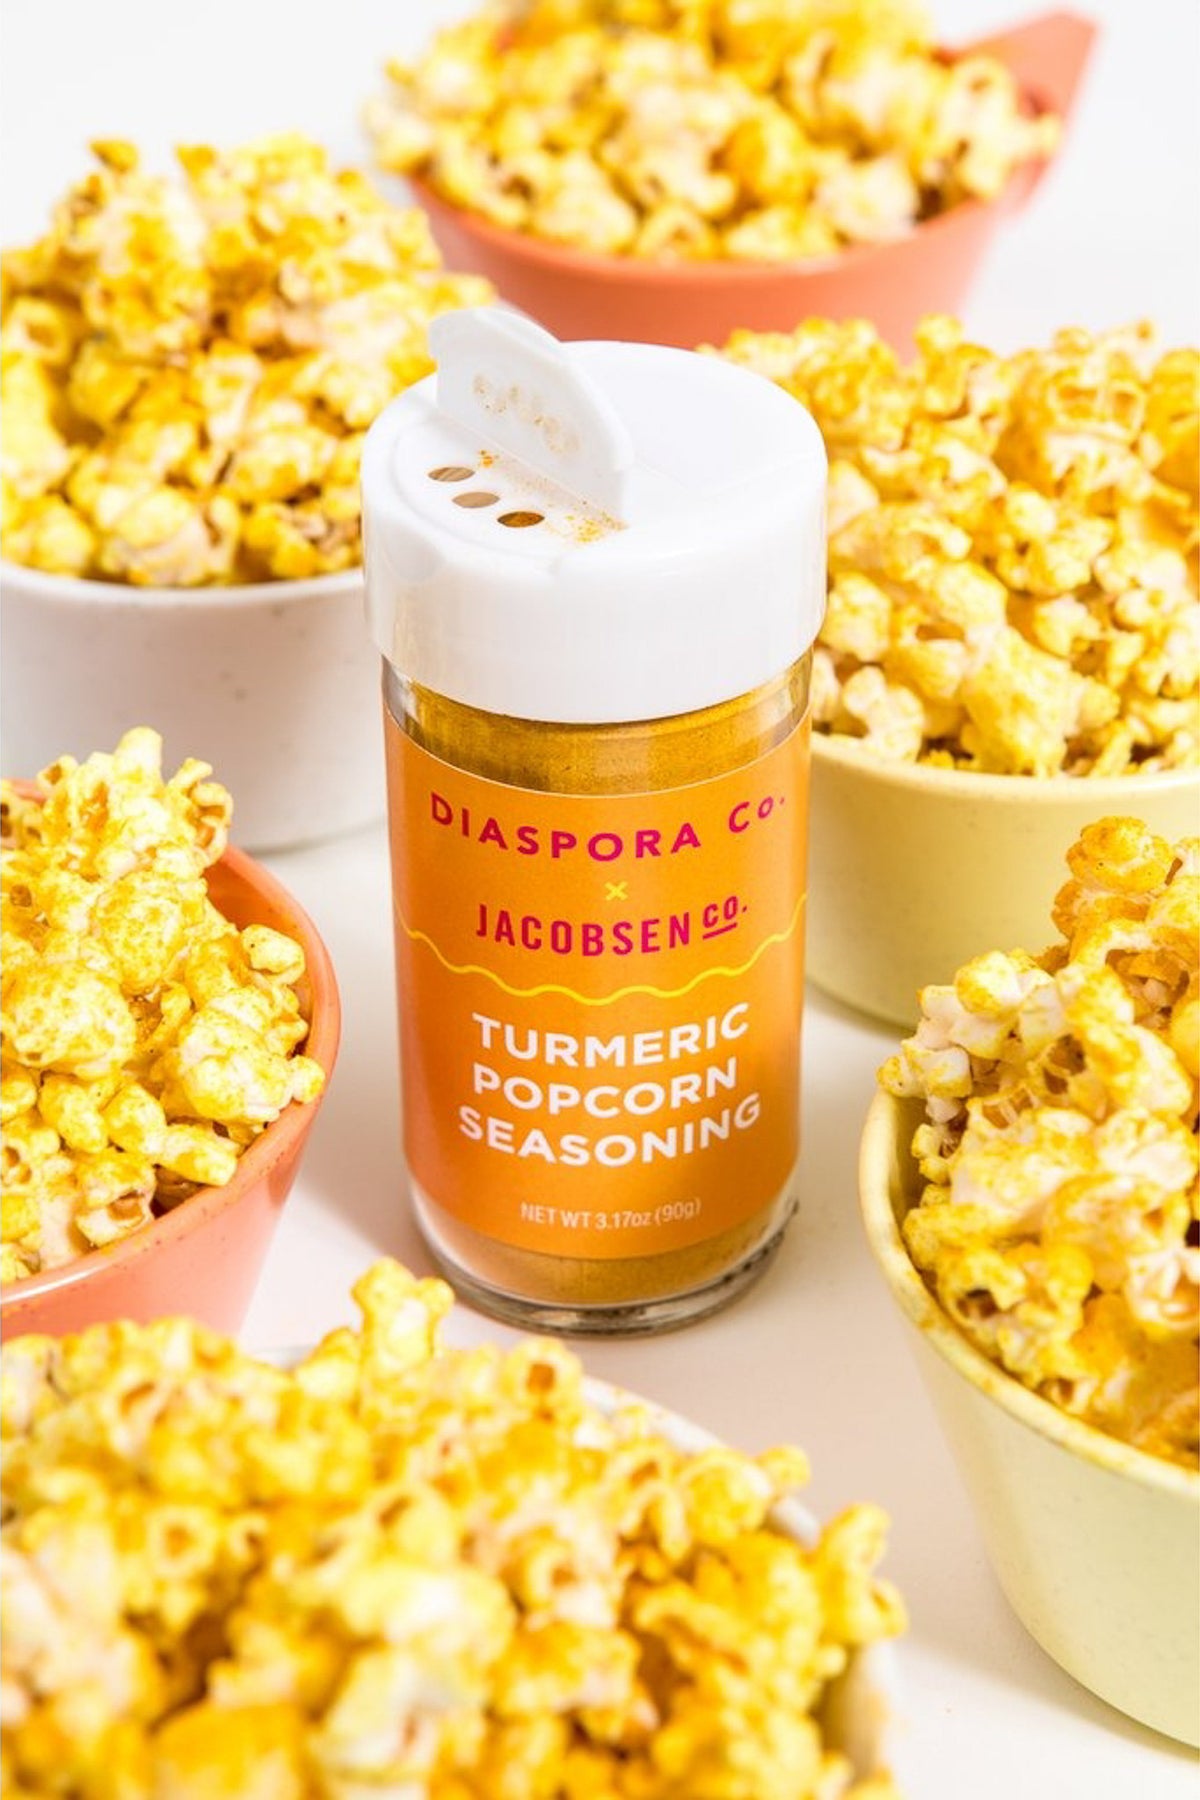 Jacobsen Salt Co. Diaspora Turmeric Popcorn Seasoning